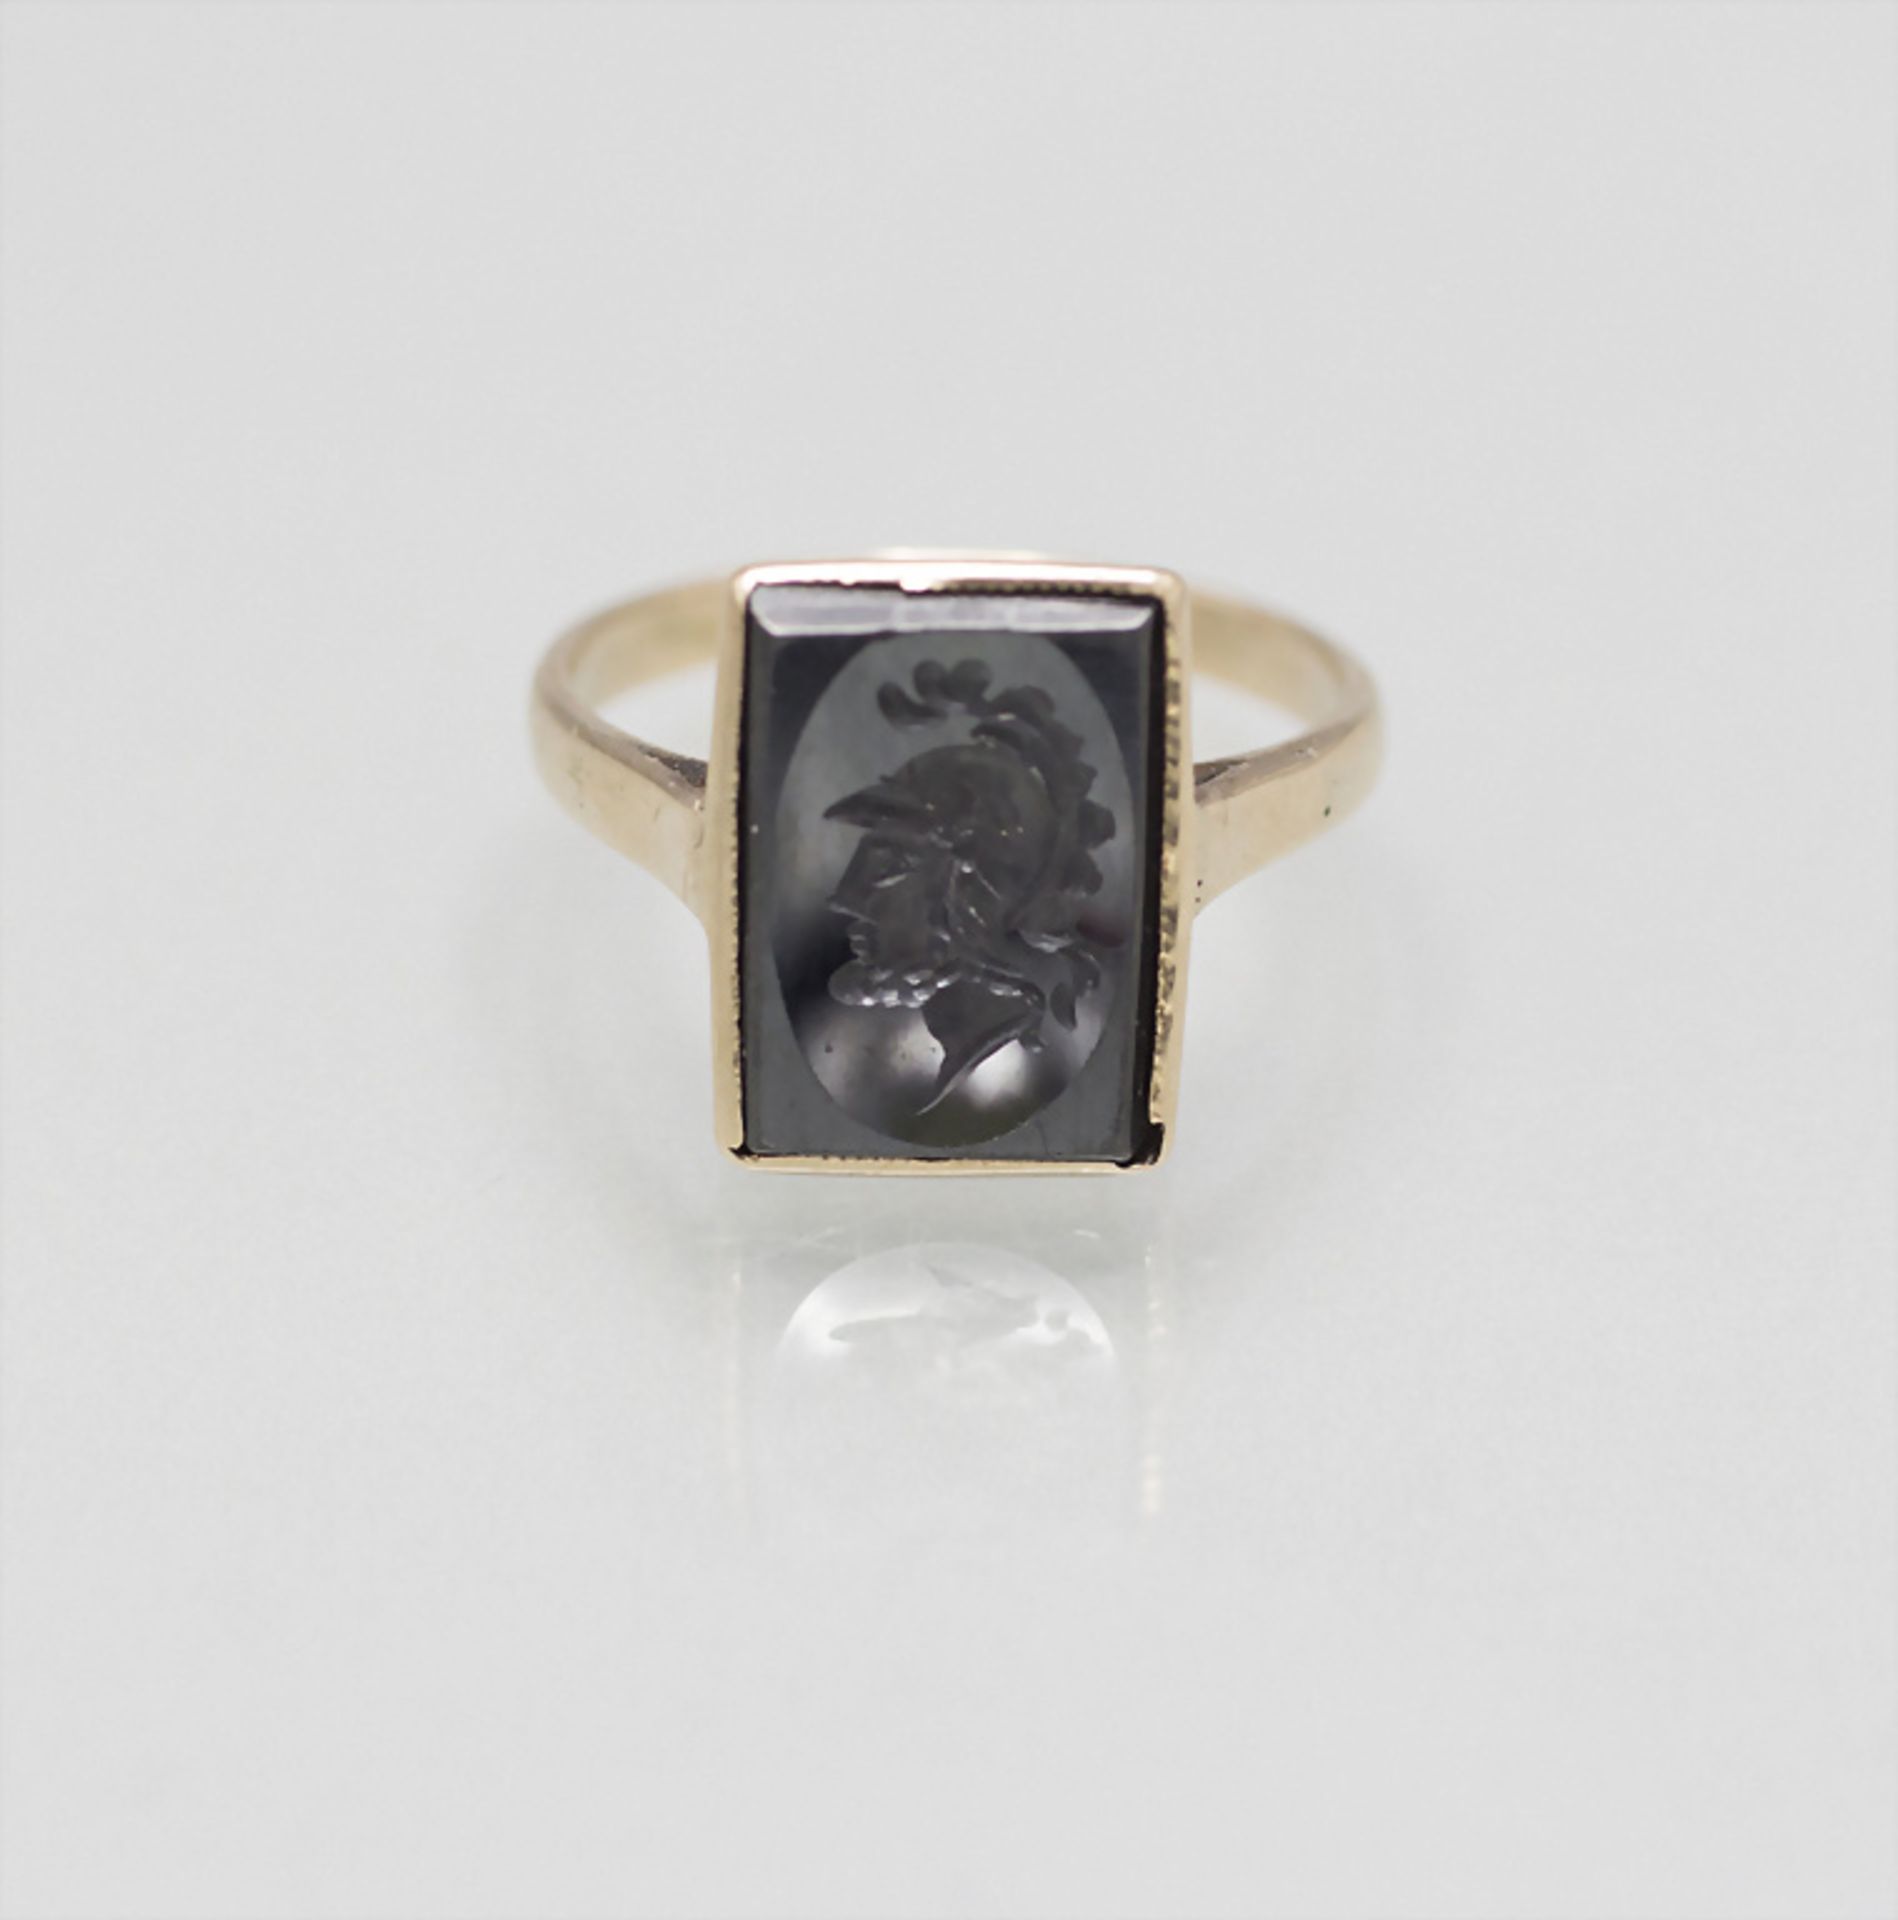 Damenring mit Gemme / A ladies 14 ct gold ring with a gem, um 1900